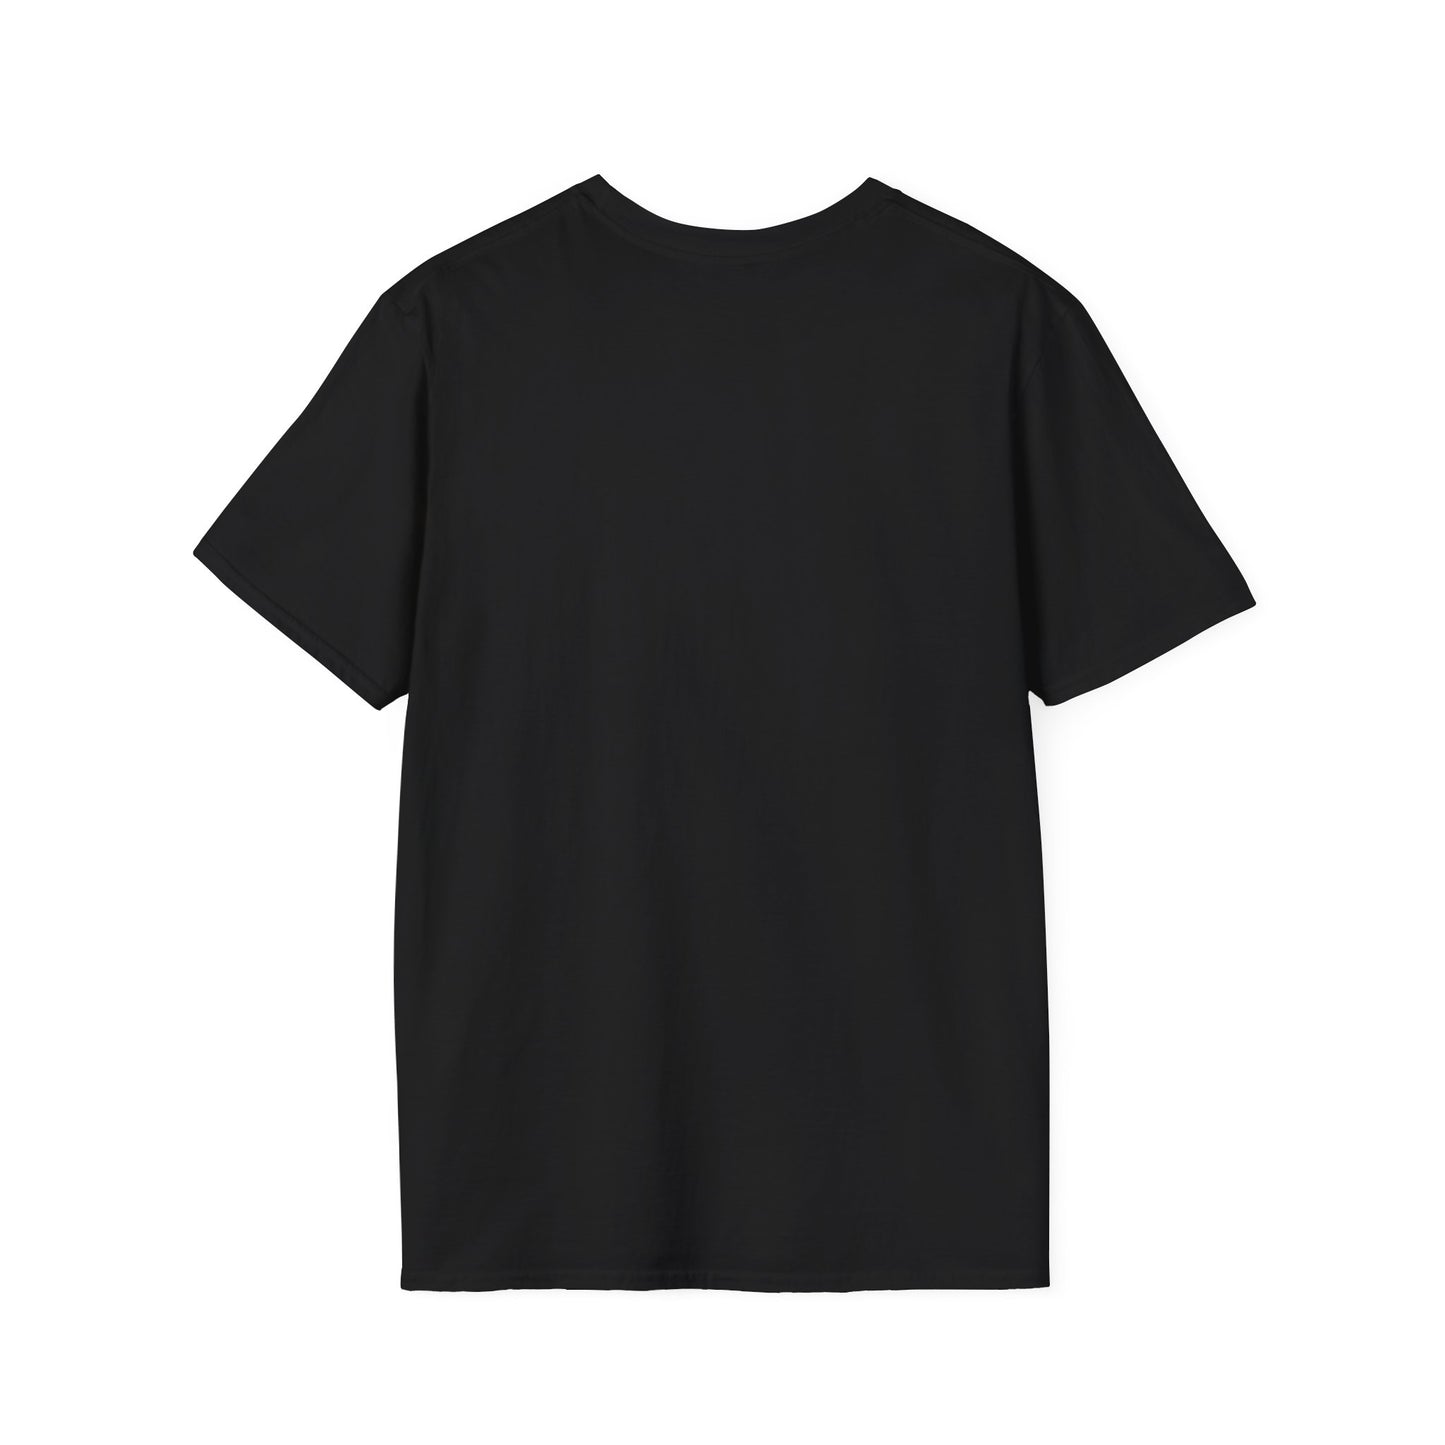 Erie Radiance Eclipse, Unisex Softstyle Tee, Trendy Casual Shirt, Stylish Comfort